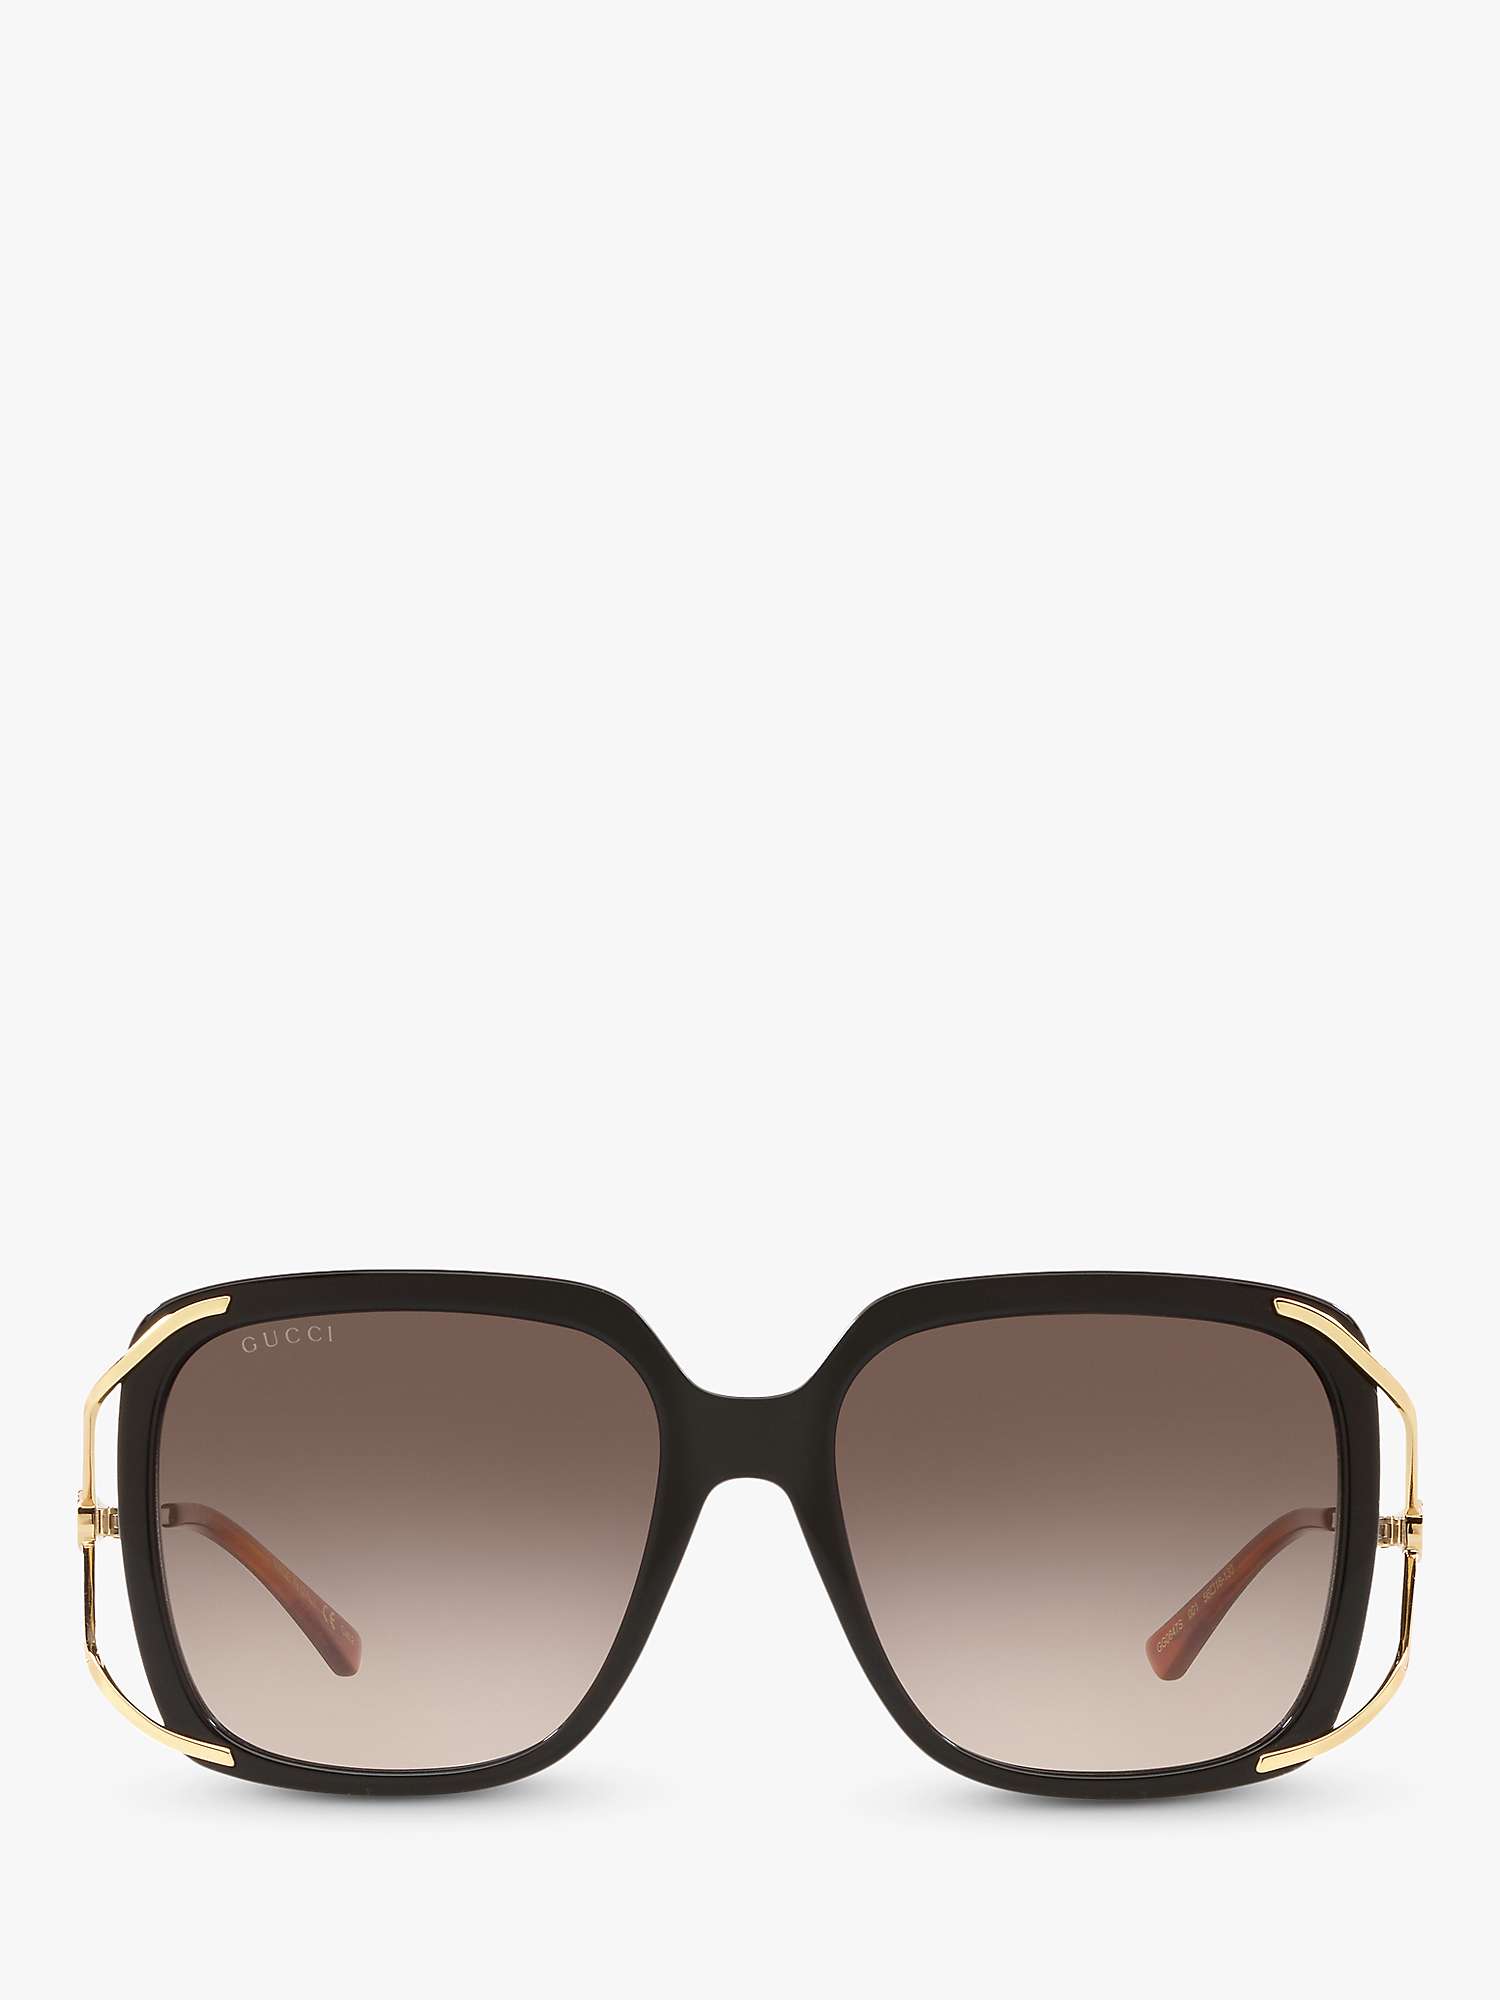 Buy Gucci GG0647S Women's Statement Square Sunglasses, Black/Brown Gradient Online at johnlewis.com